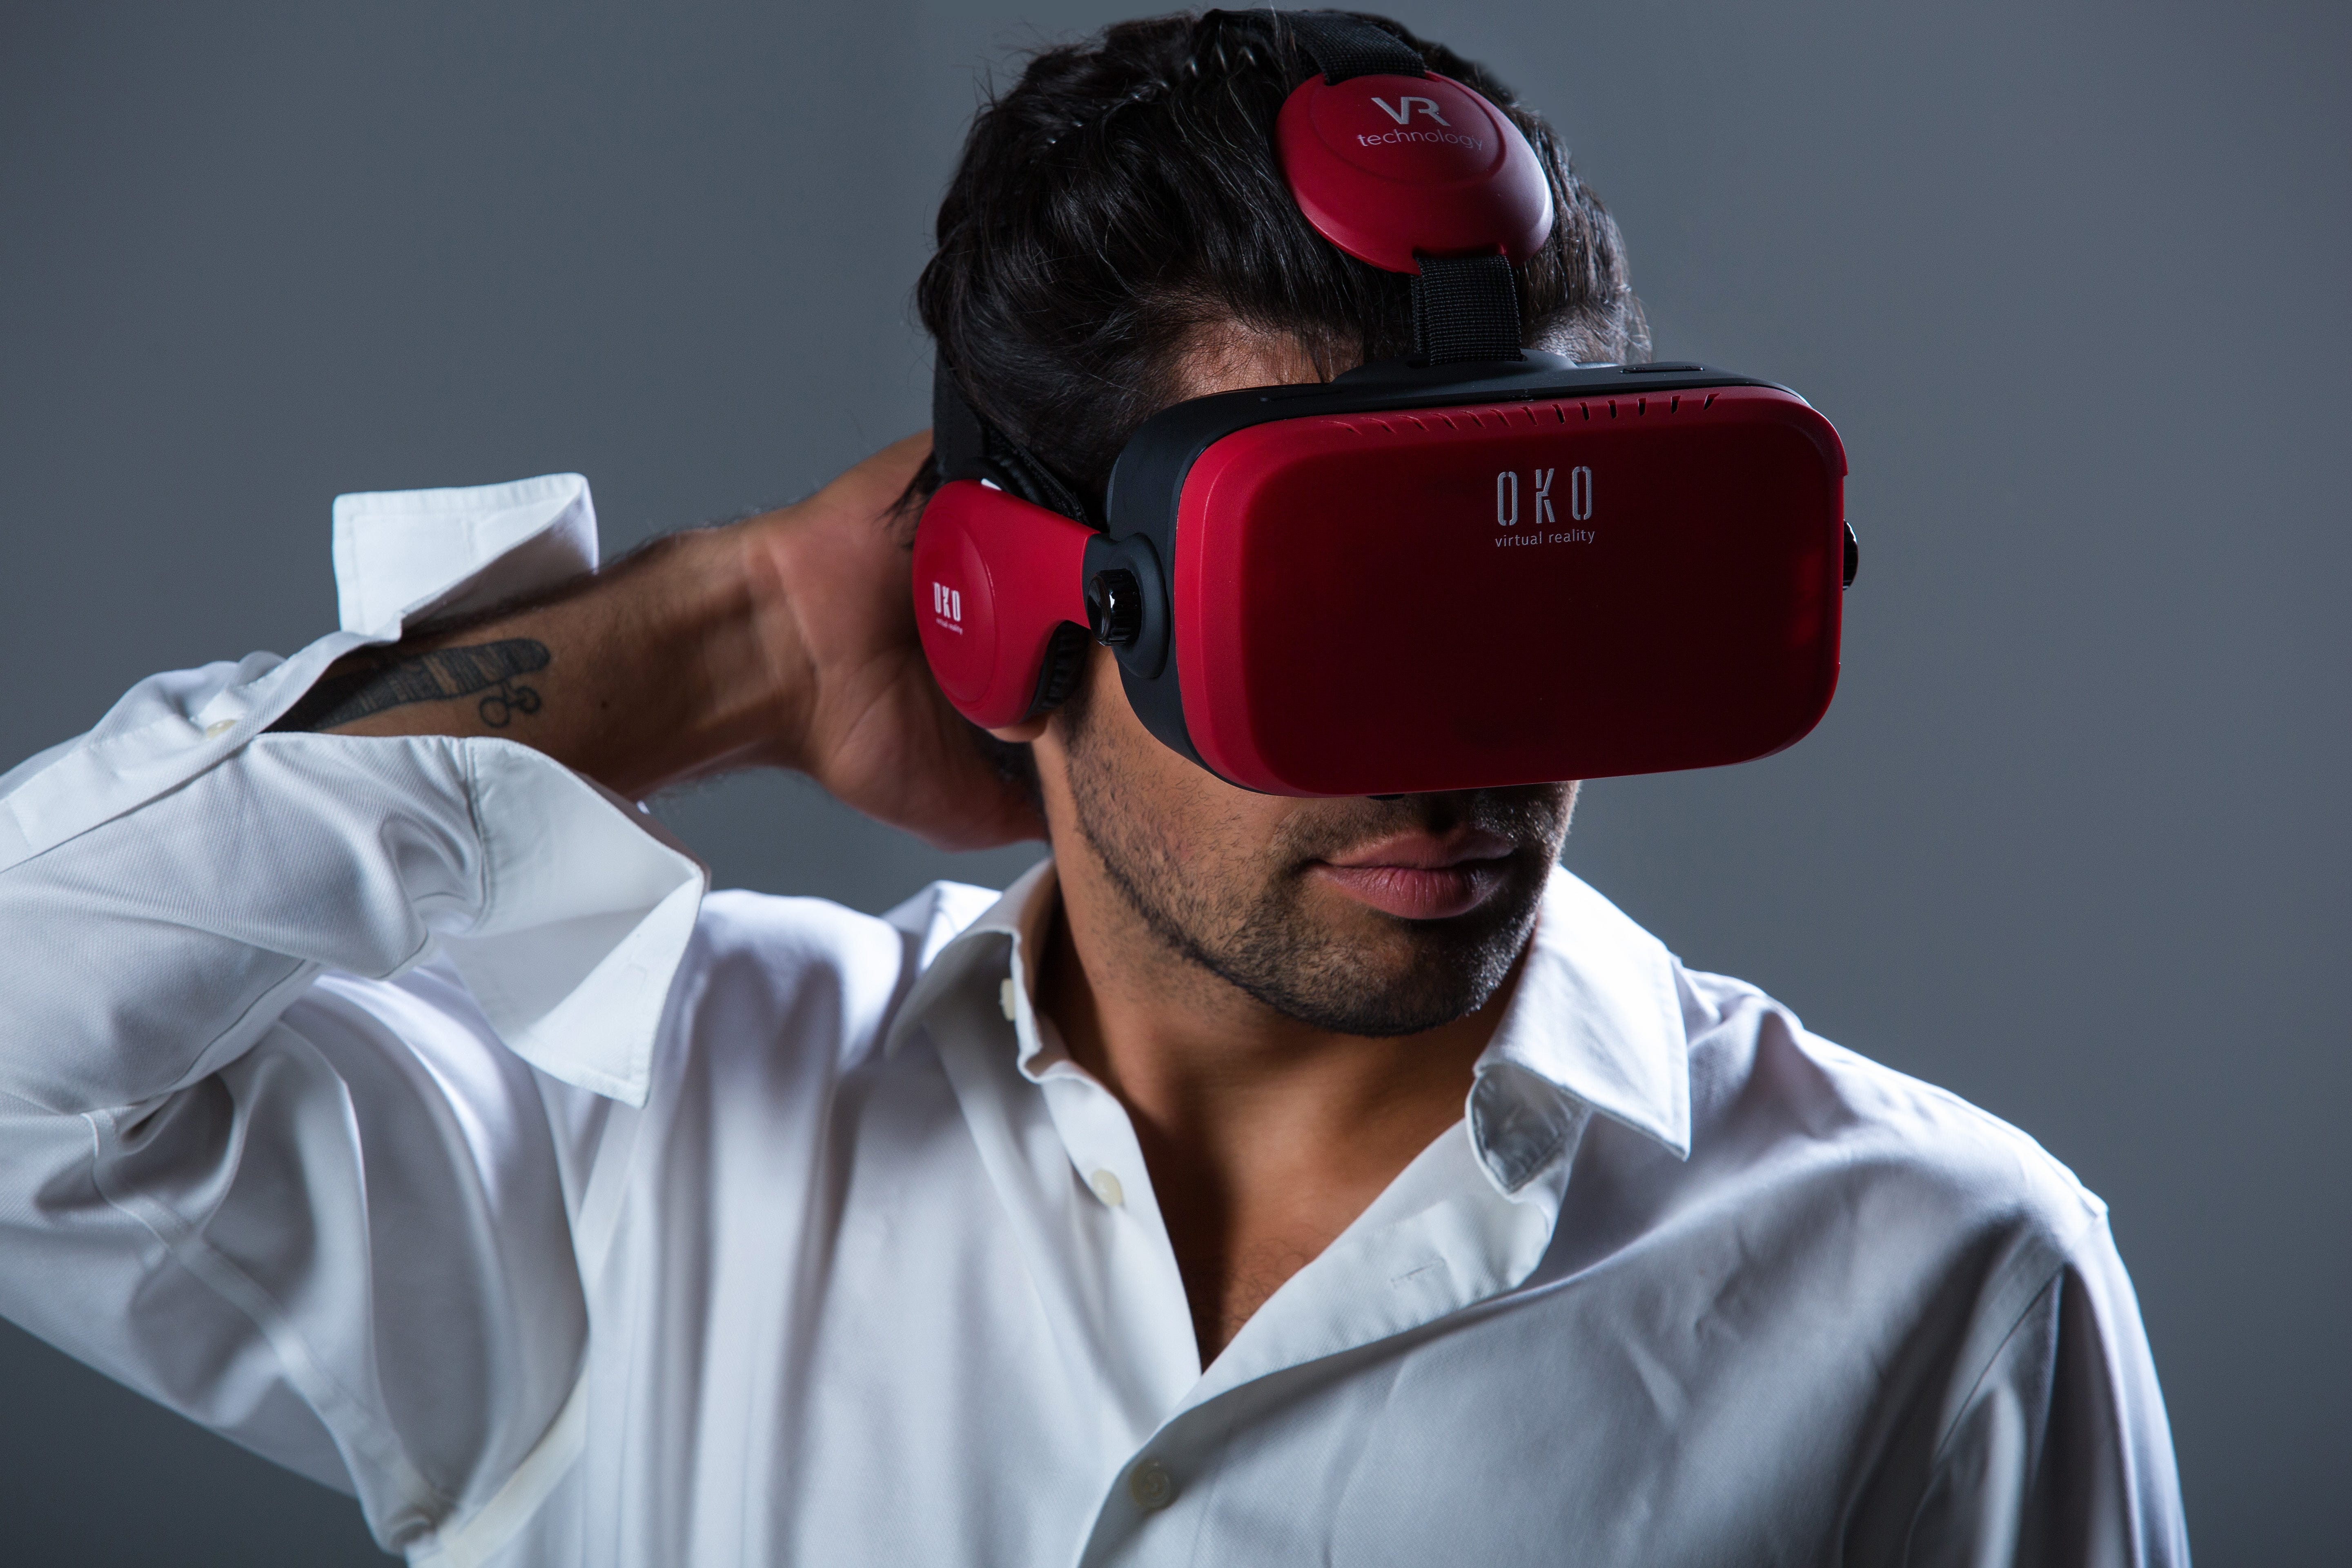 virtual reality porn